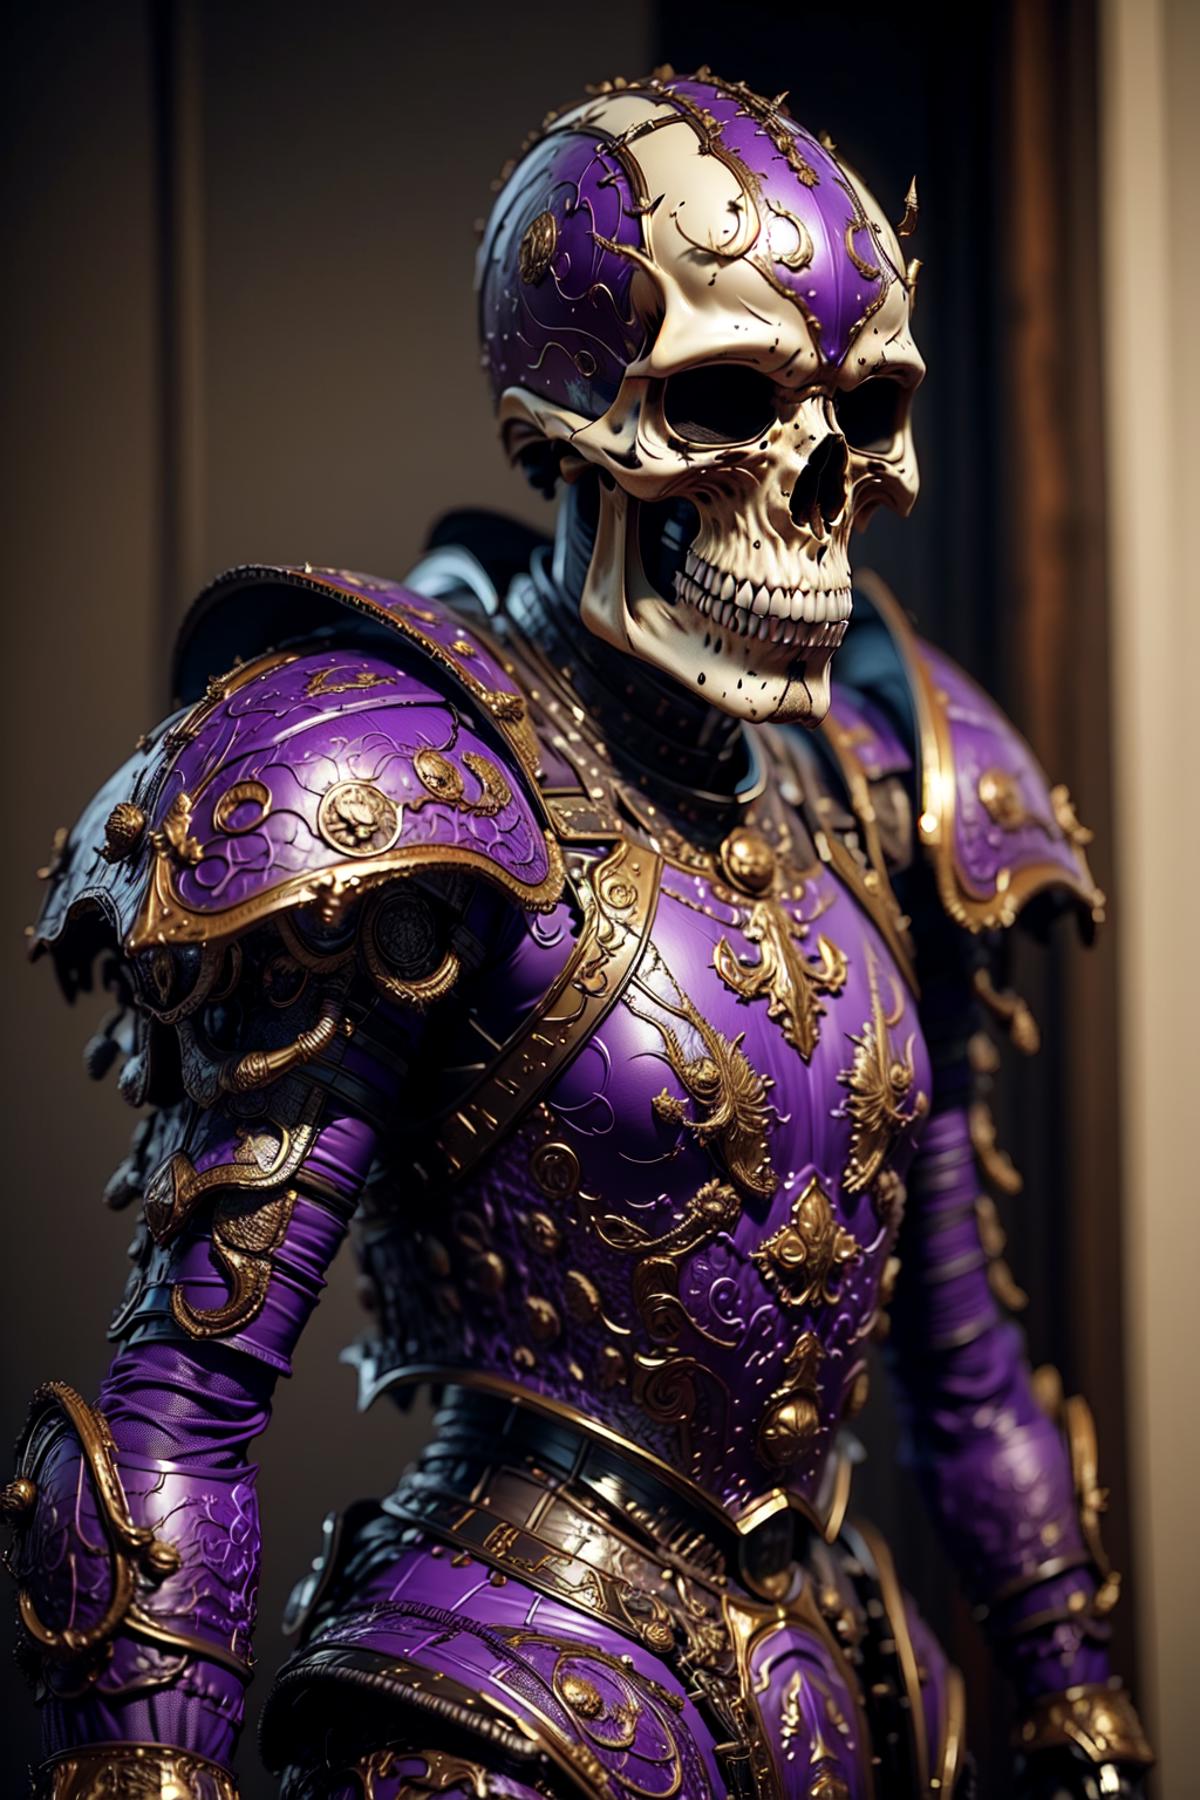 Skull Warrior image by LDWorksDervlex